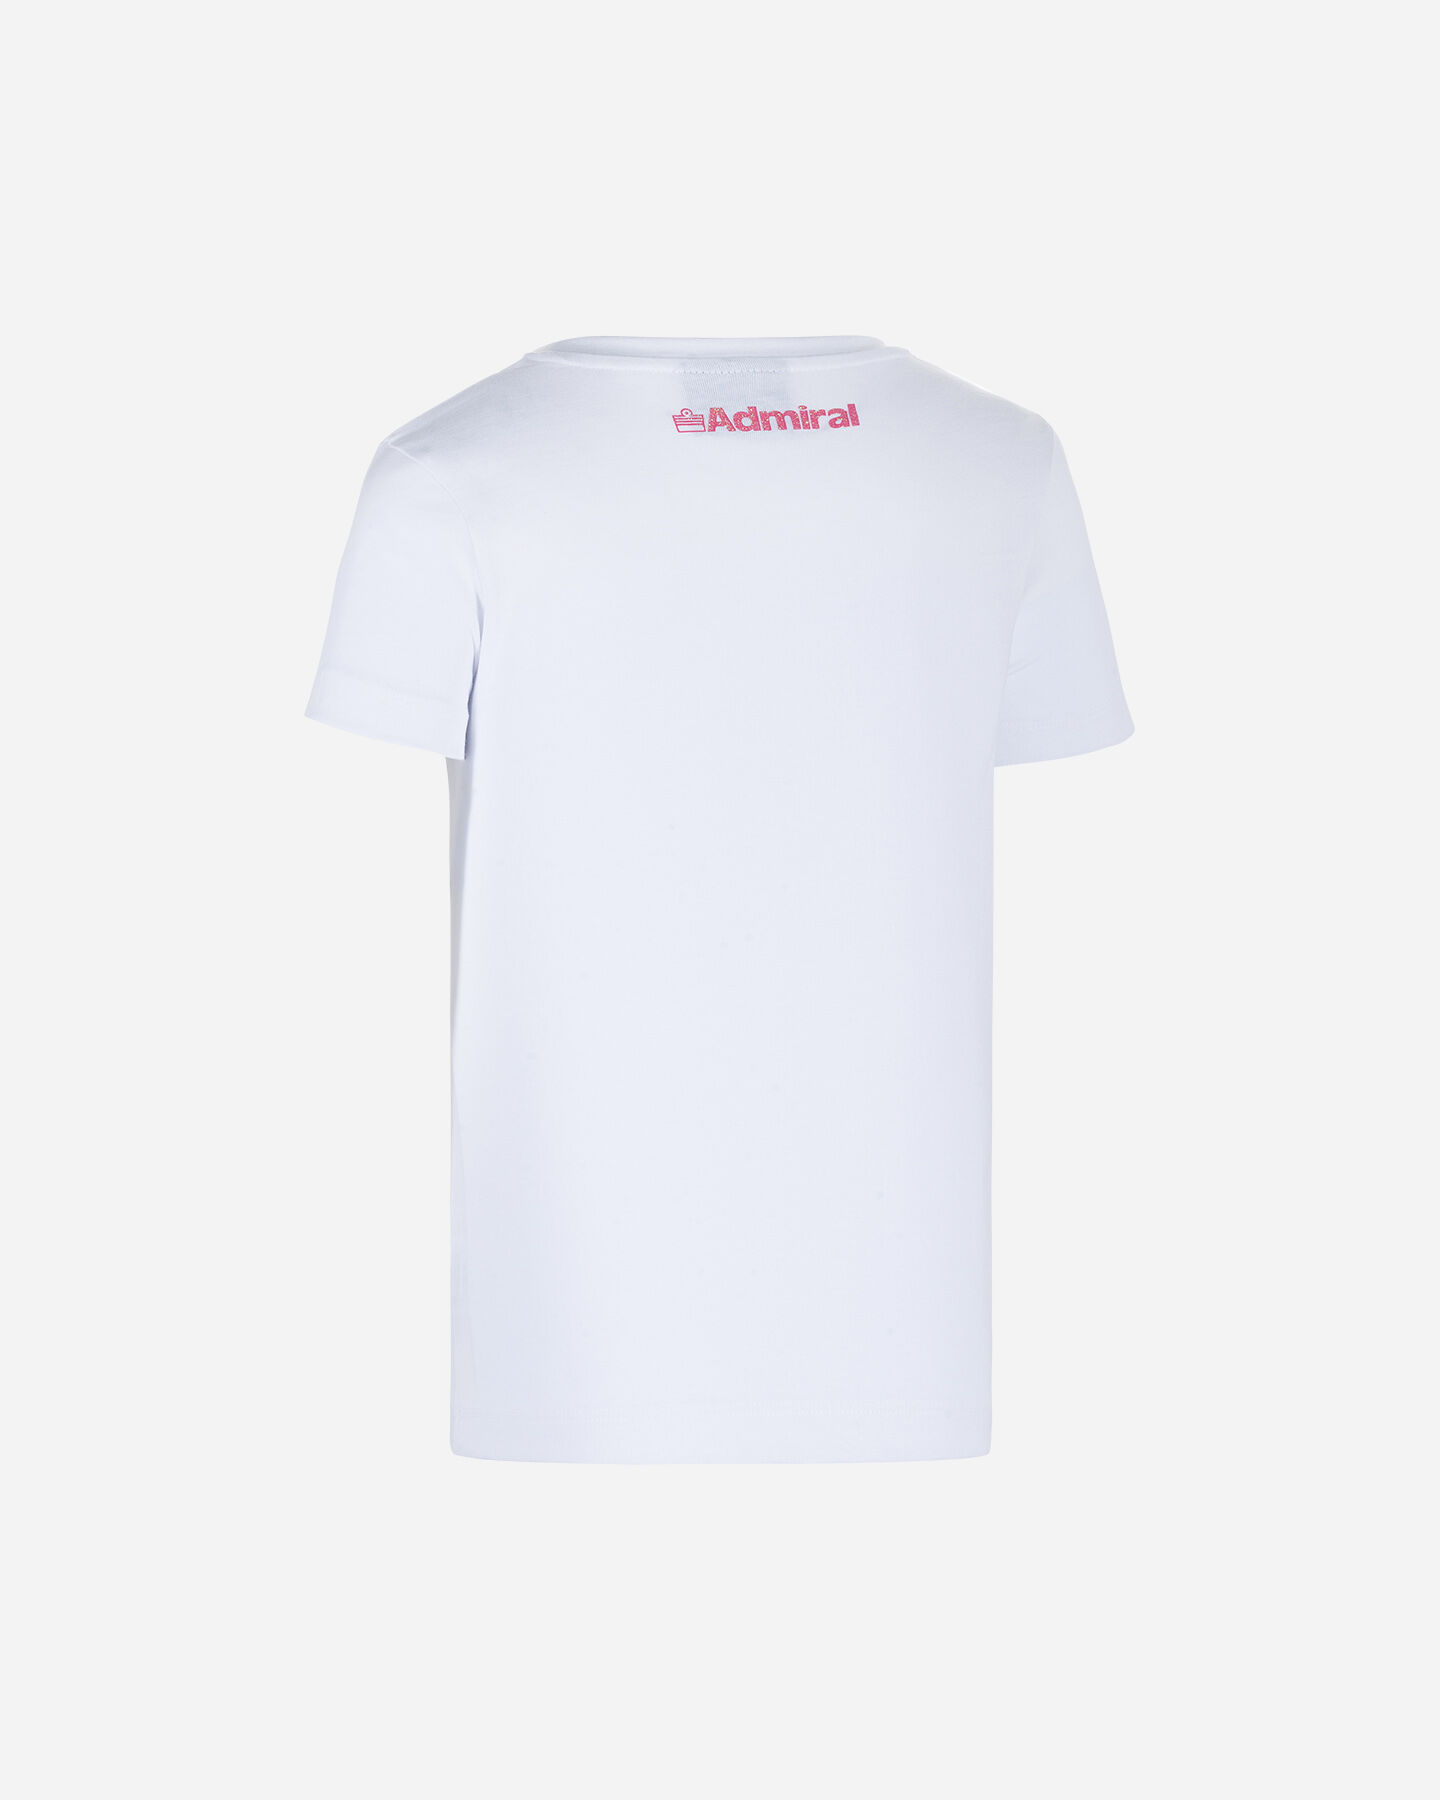  T-Shirt ADMIRAL RAINBOW JR S4075962|001|4A scatto 1